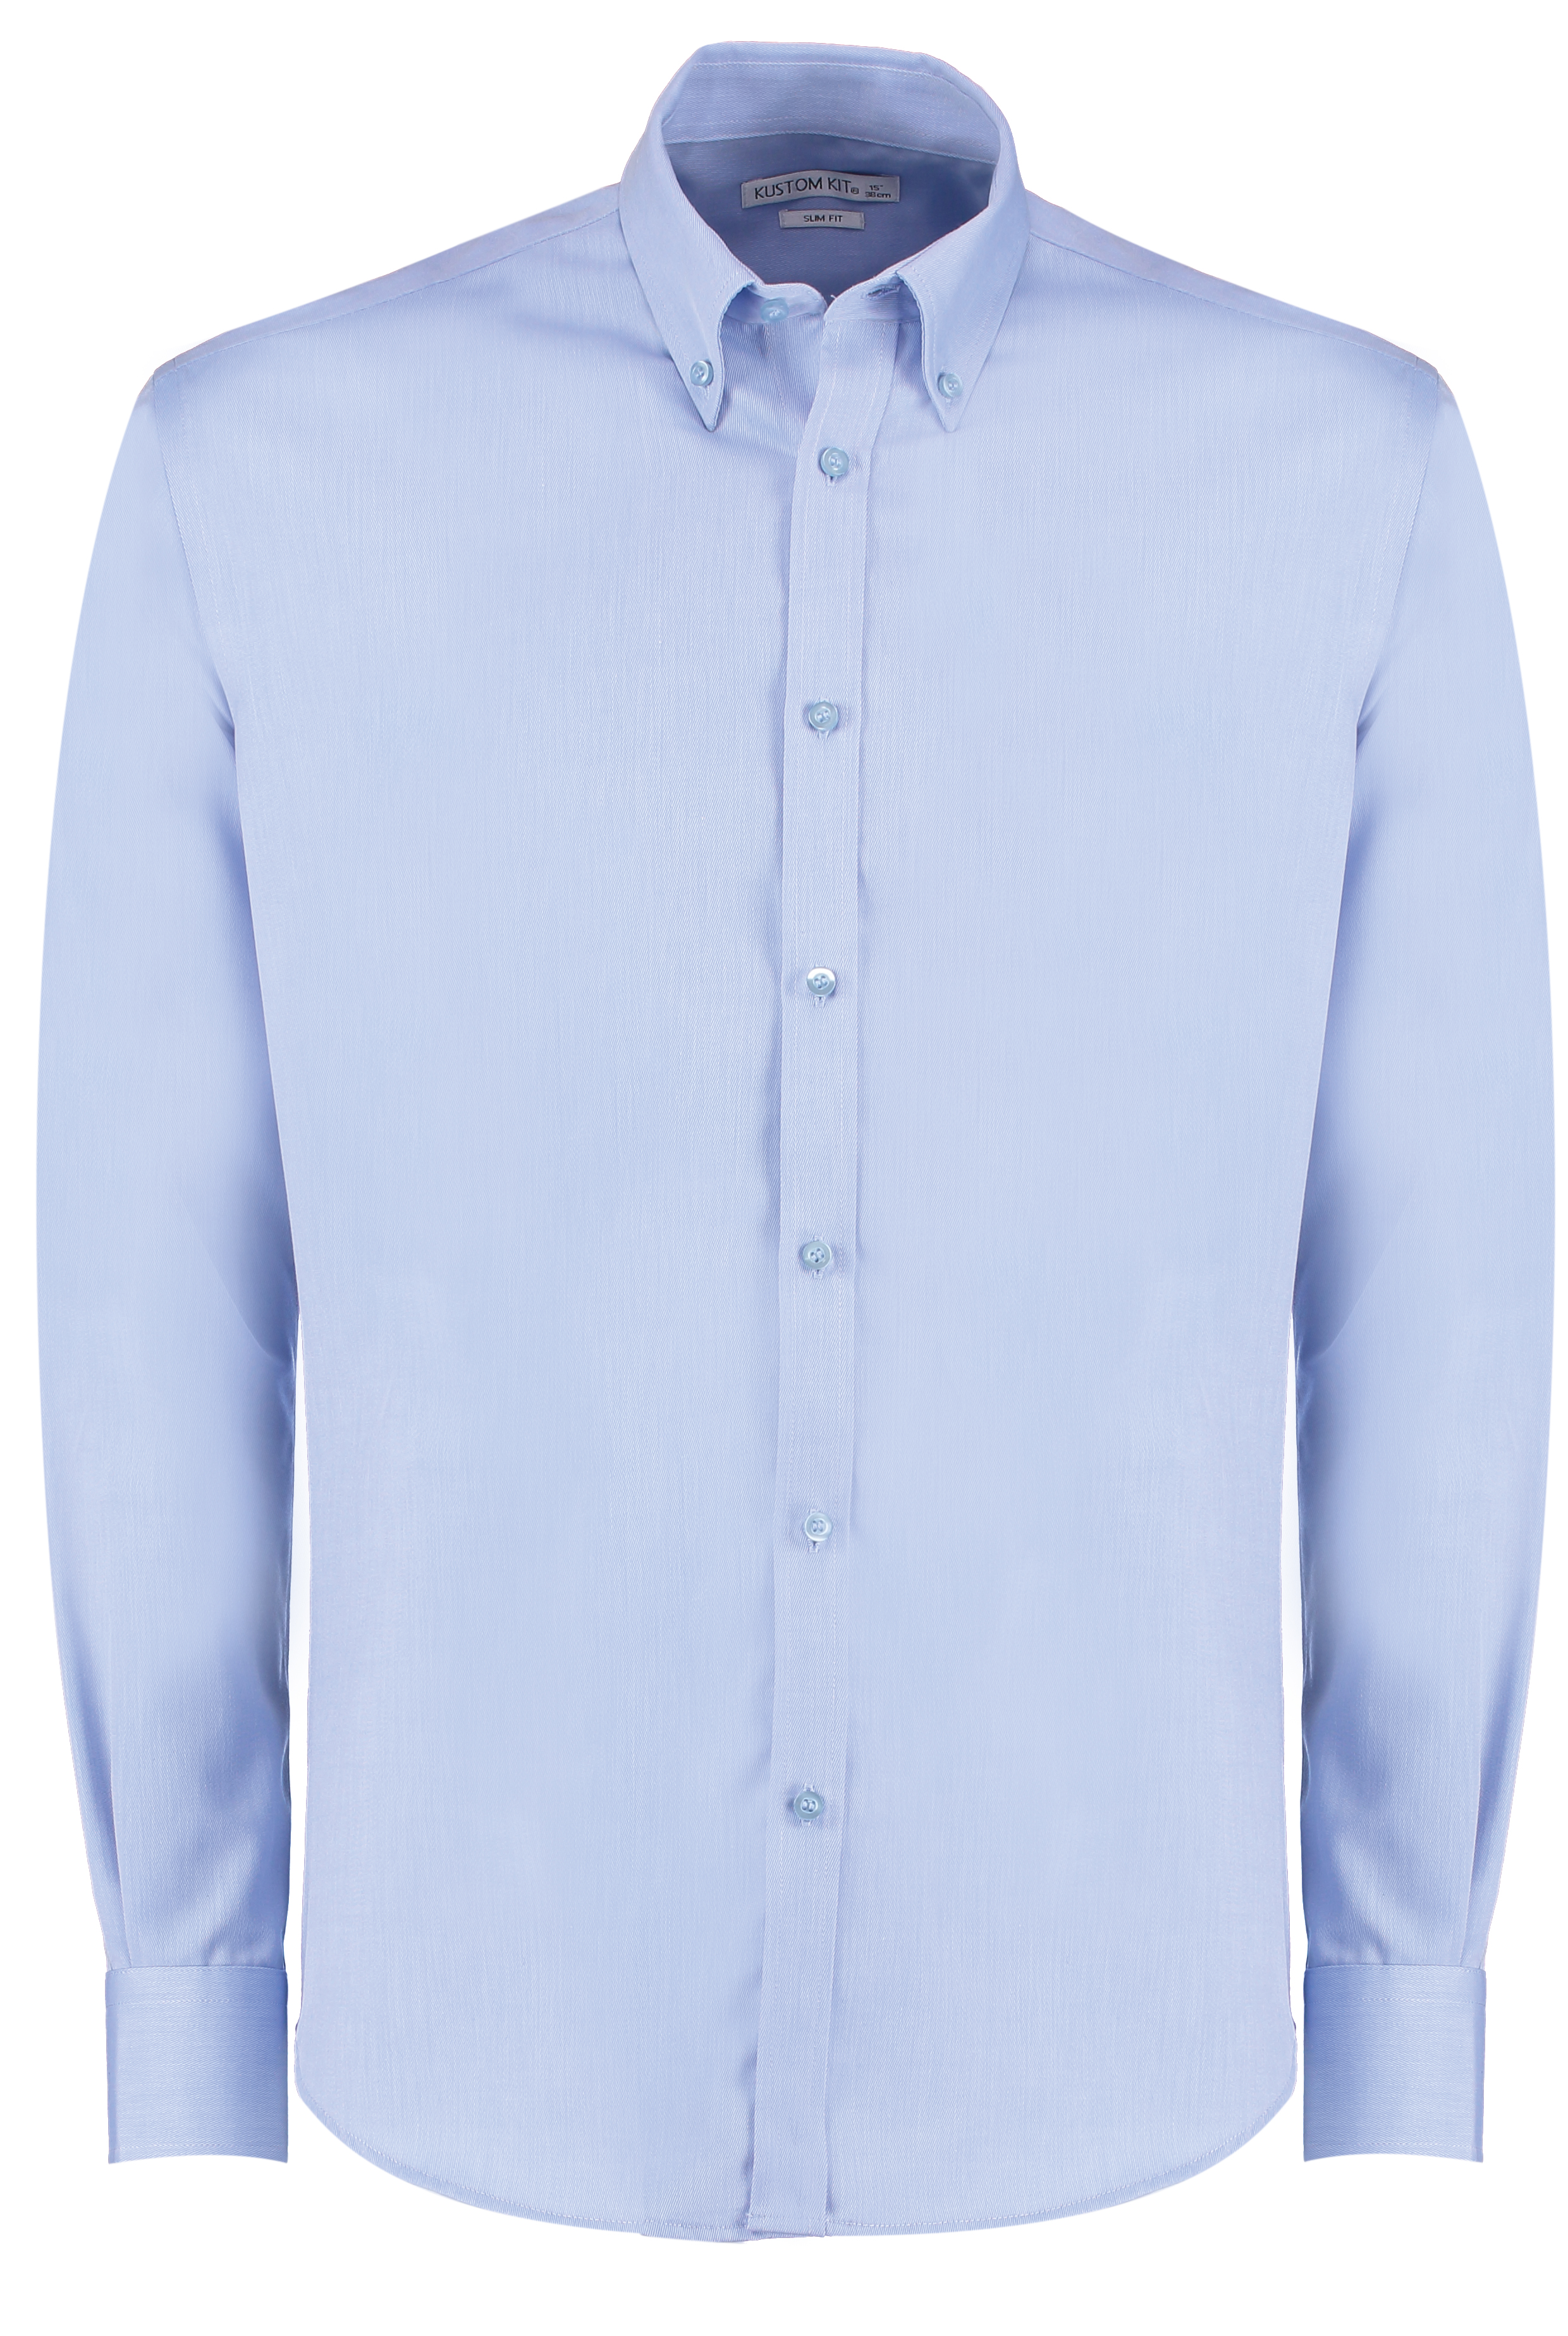 Kustom Kit Men's Slim Fit Oxford 100% Cotton Twill Shirt Long Sleeve KK139 